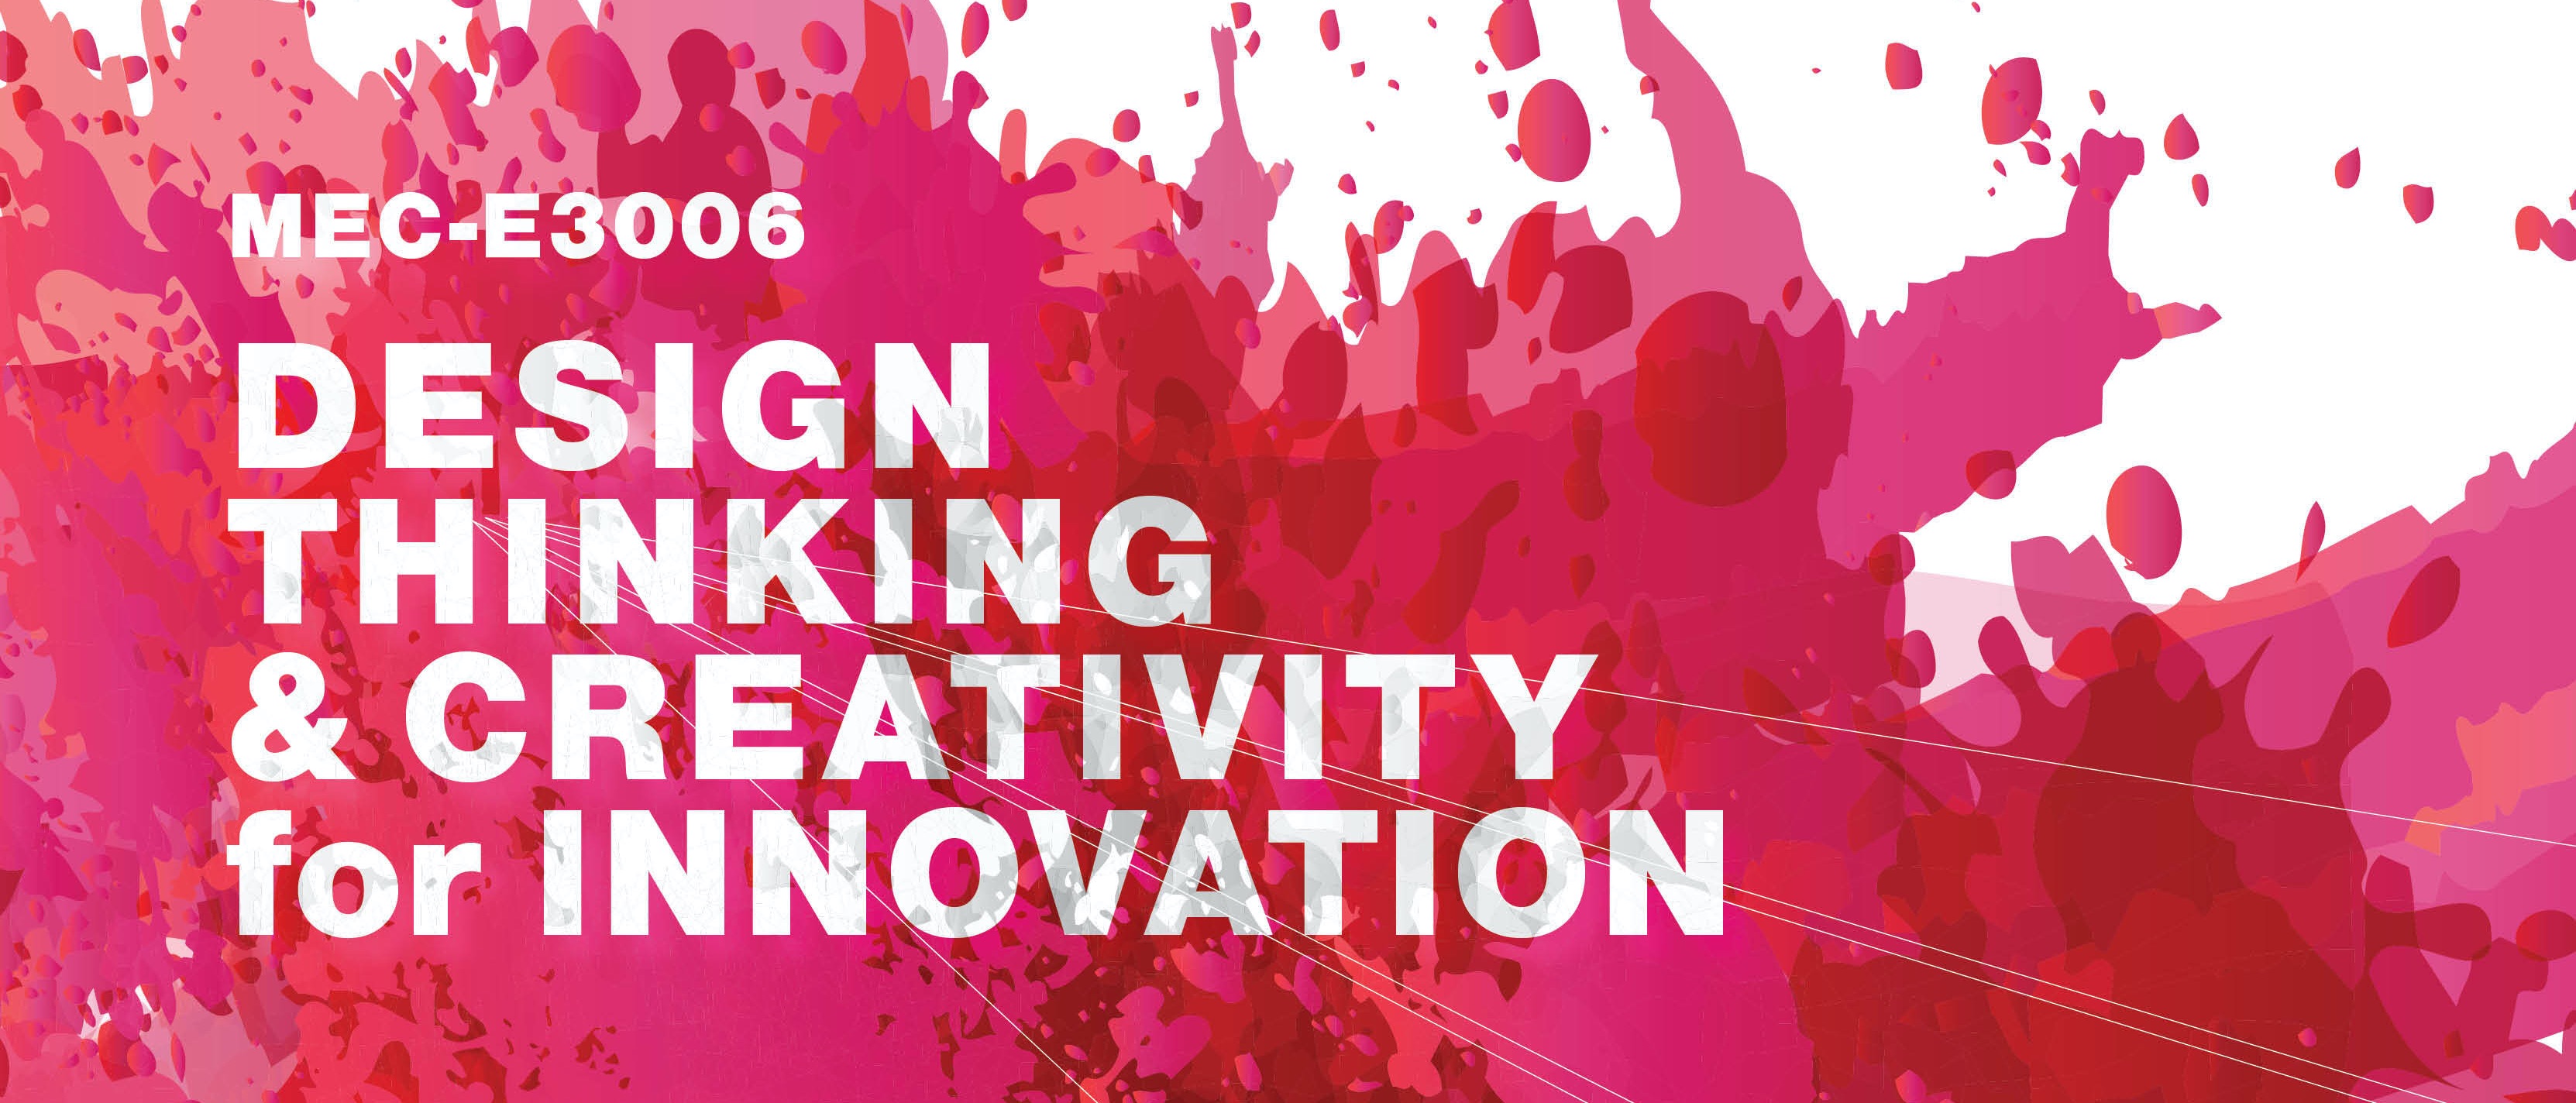 MEC-E3006 Design thinking and creativity for innovation